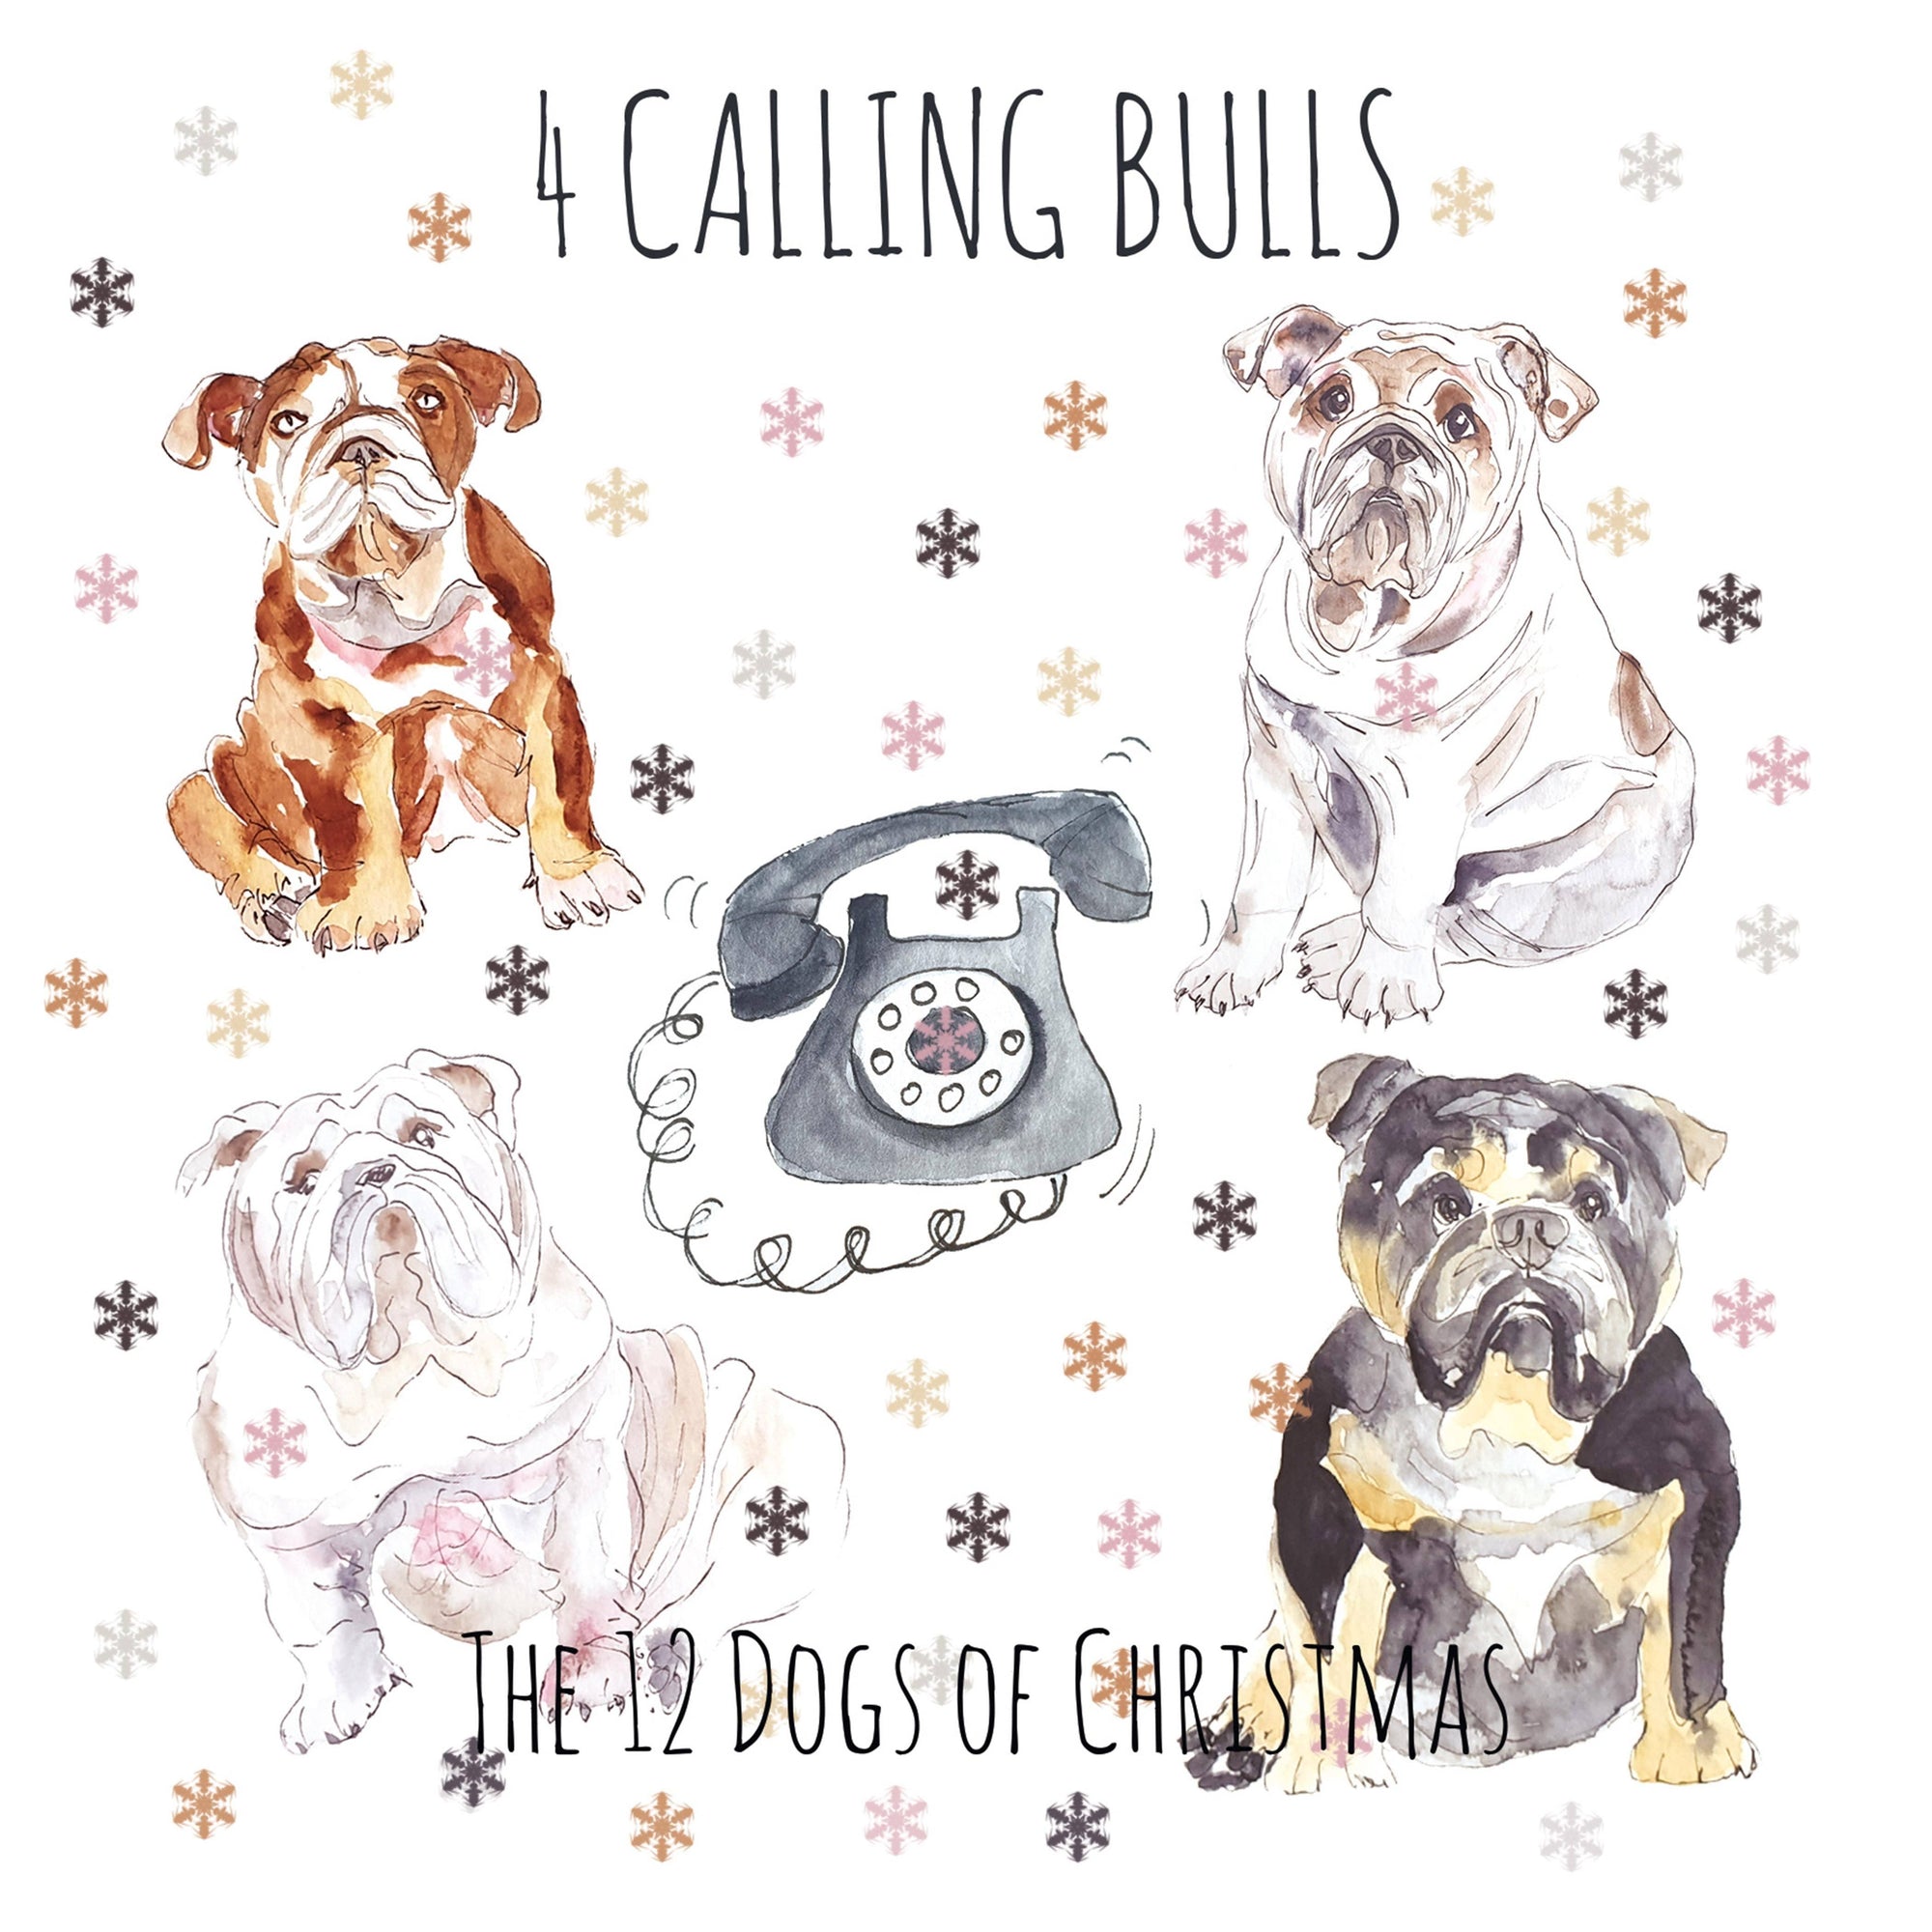 4 Calling Bulls Christmas Card